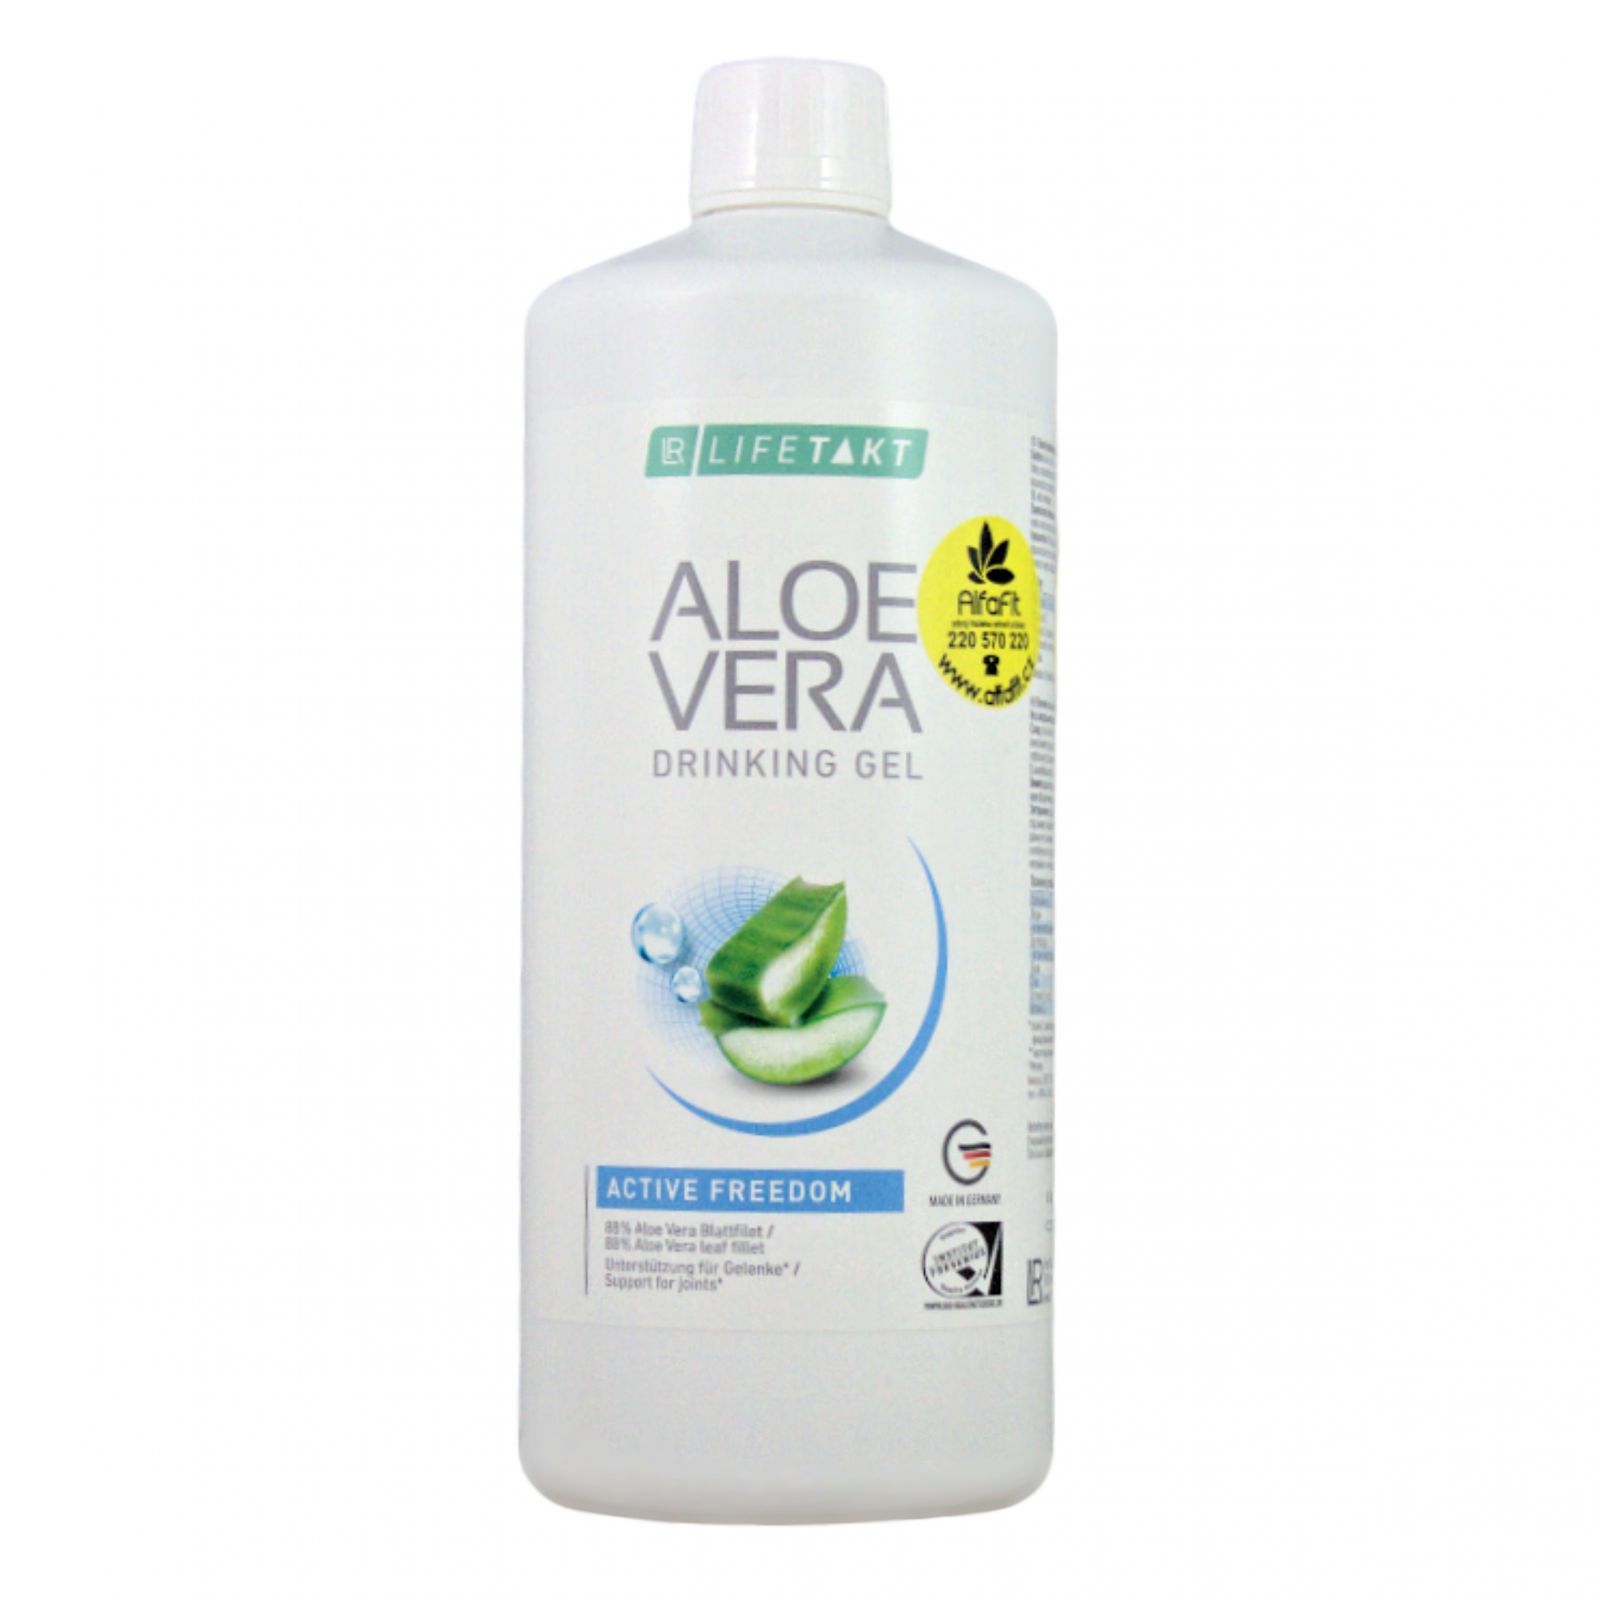 LR LIFETAKT Aloe Vera Drinking Gel Active Freedom 1000 ml